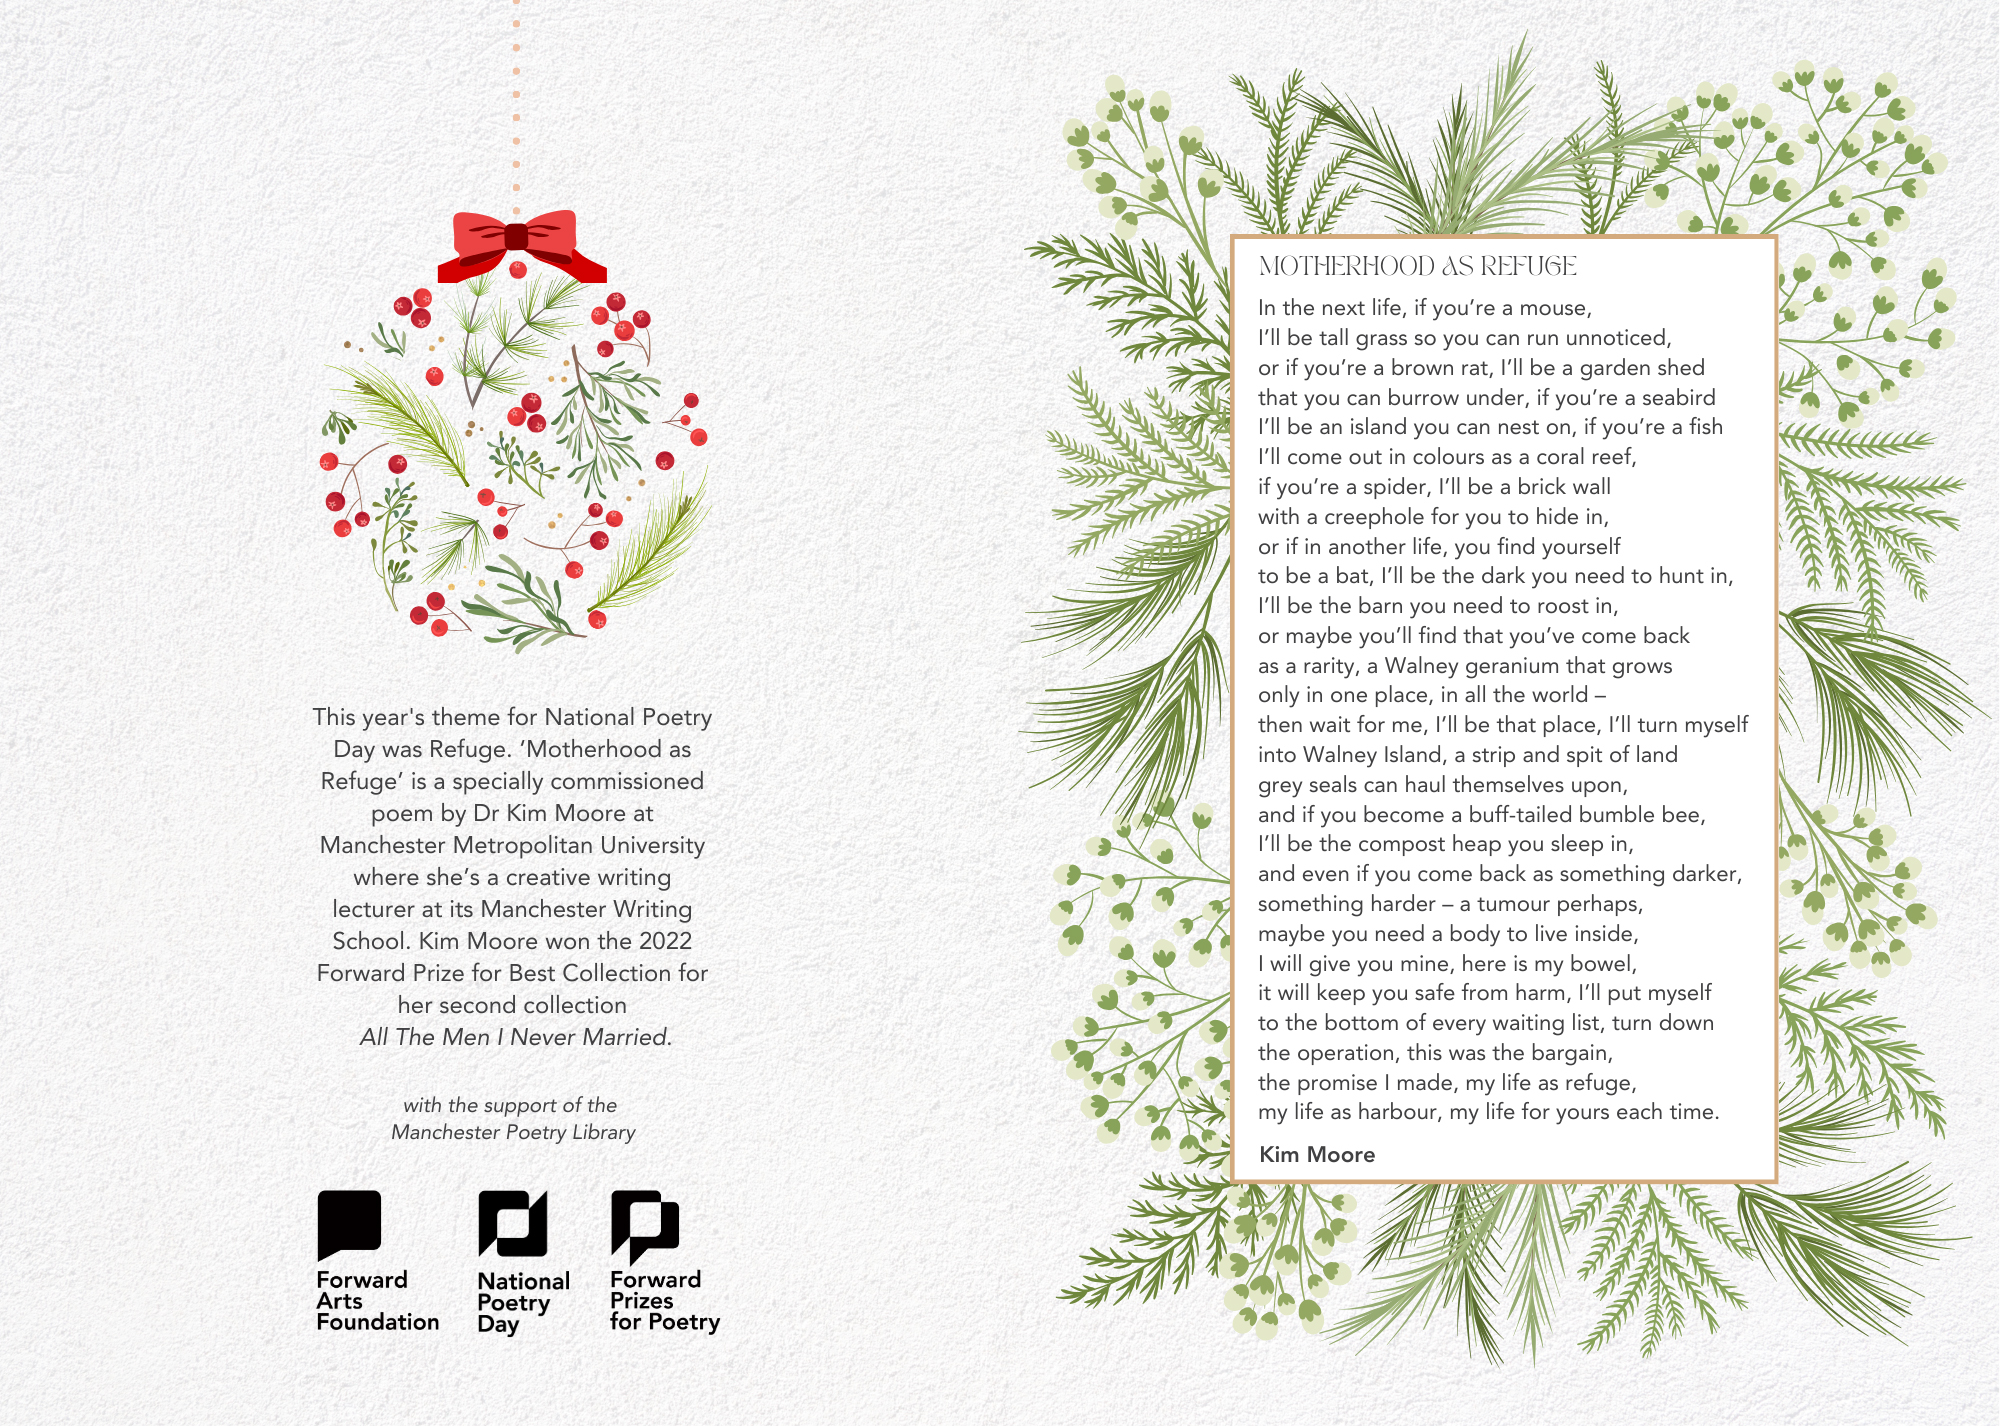 Dr Kim Moore's poem on Forward Arts Foundation's Christmas card.